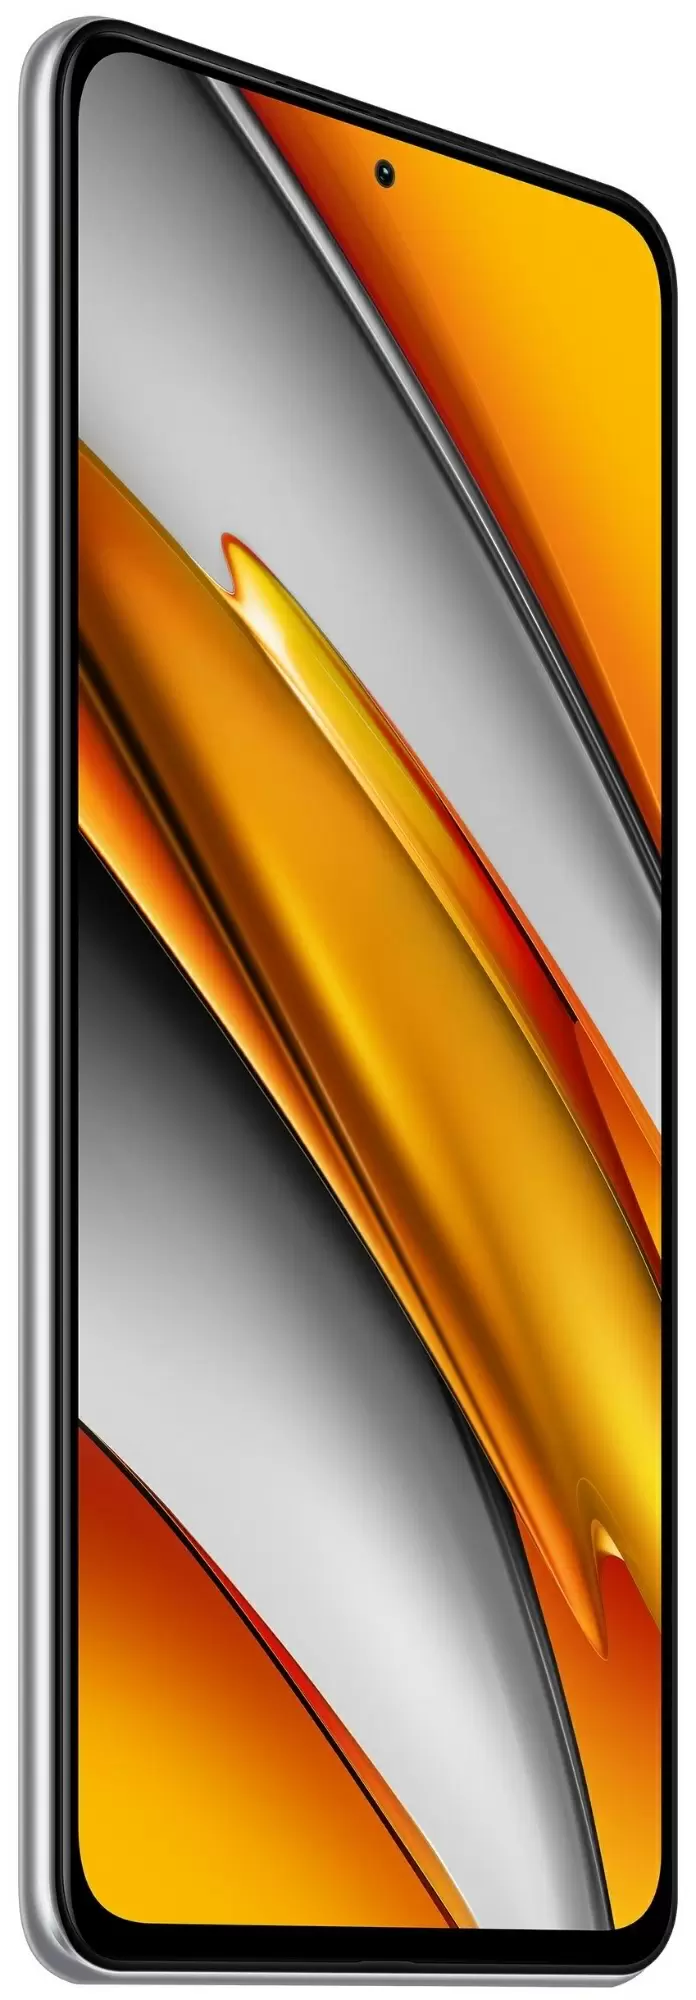 Смартфон Xiaomi Poco F3 8GB/256GB, белый